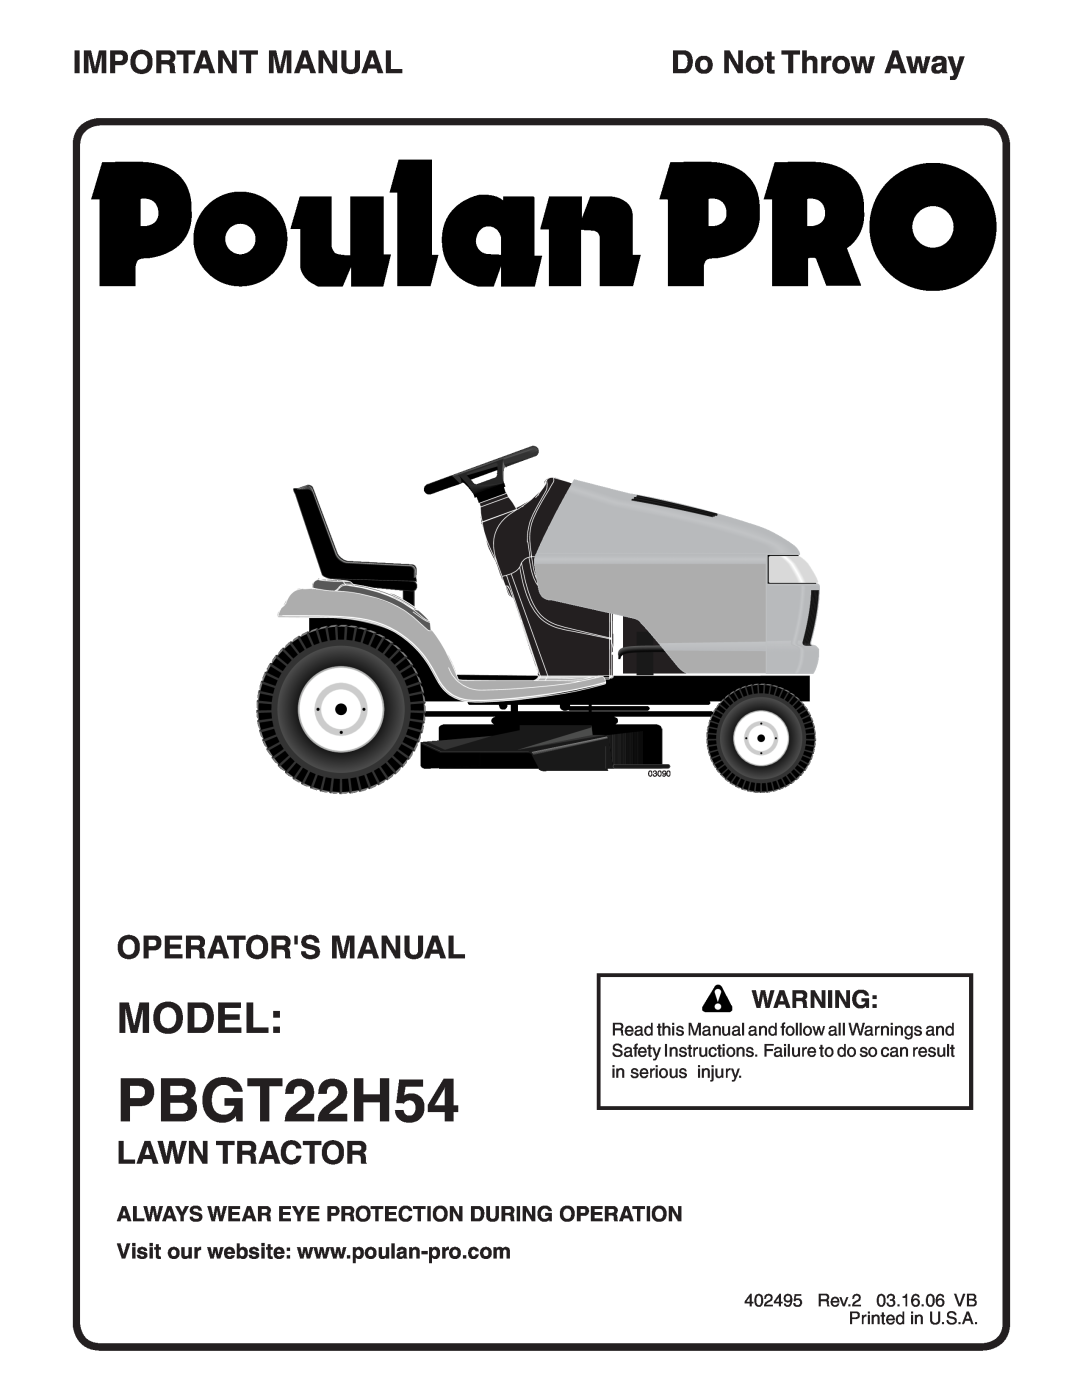 Poulan PBGT22H54 manual Model, Important Manual, Operators Manual, Lawn Tractor, Do Not Throw Away, 03090 